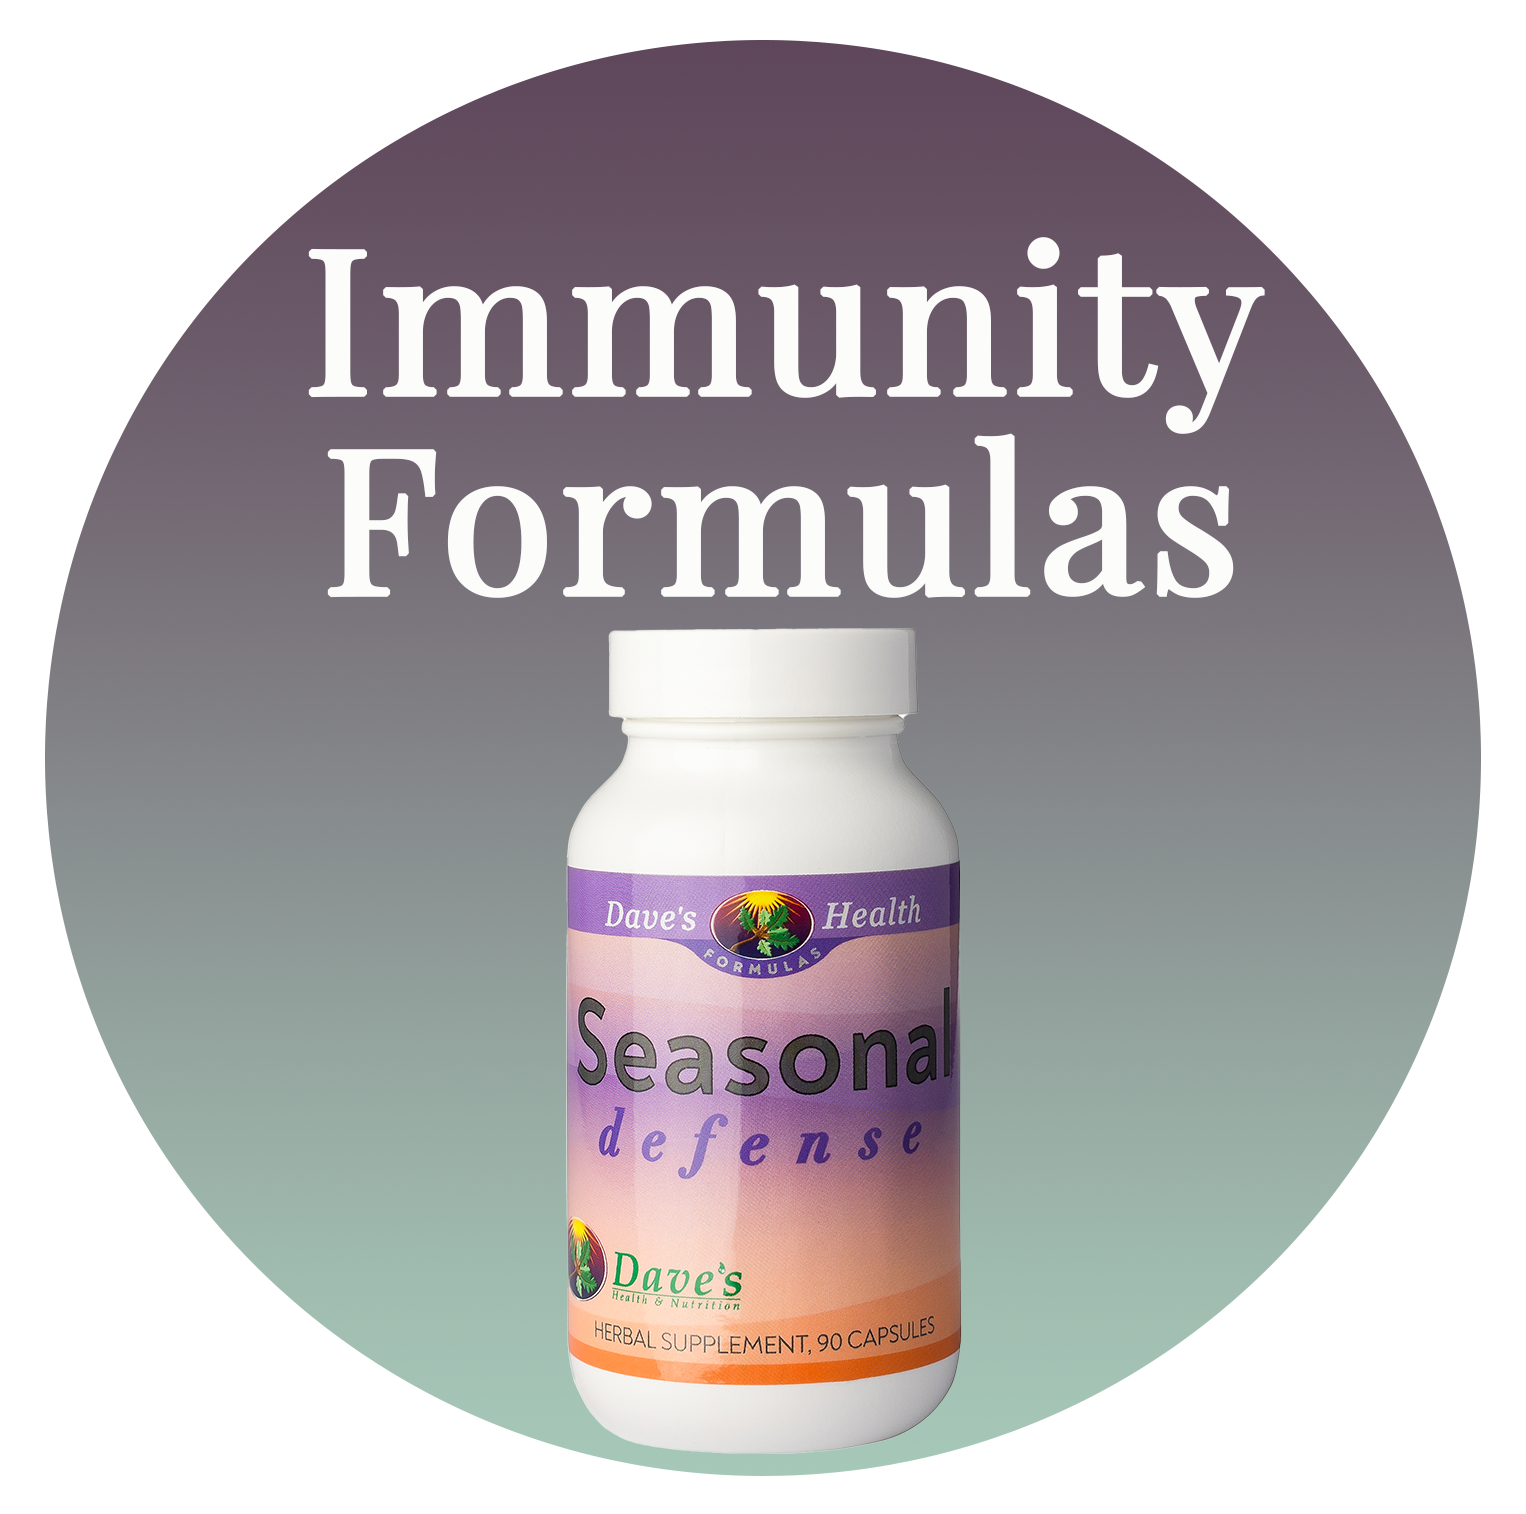 Immunity Formulas